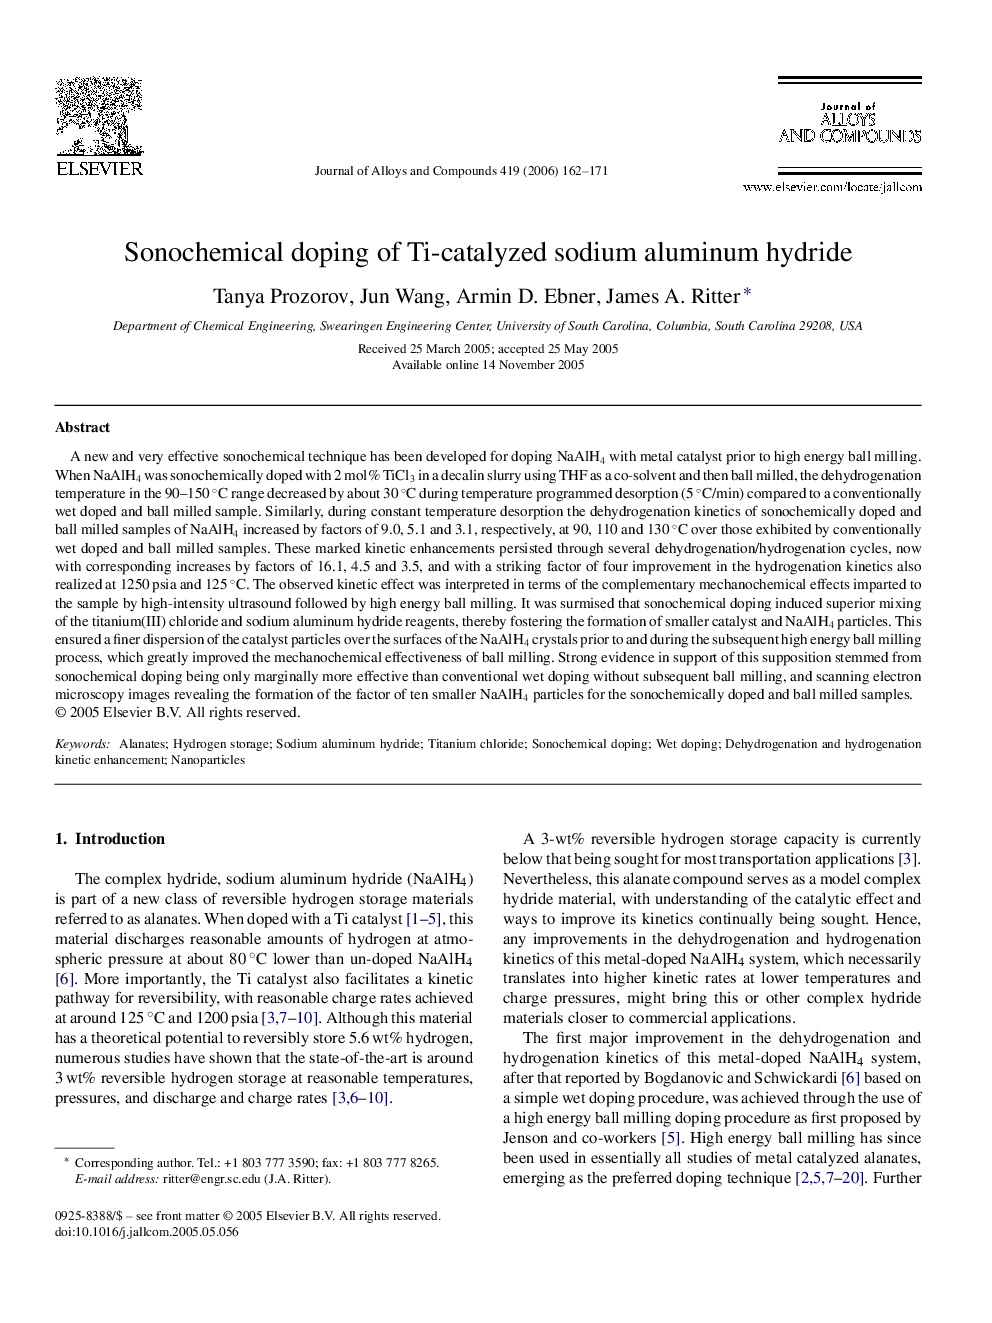 Sonochemical doping of Ti-catalyzed sodium aluminum hydride